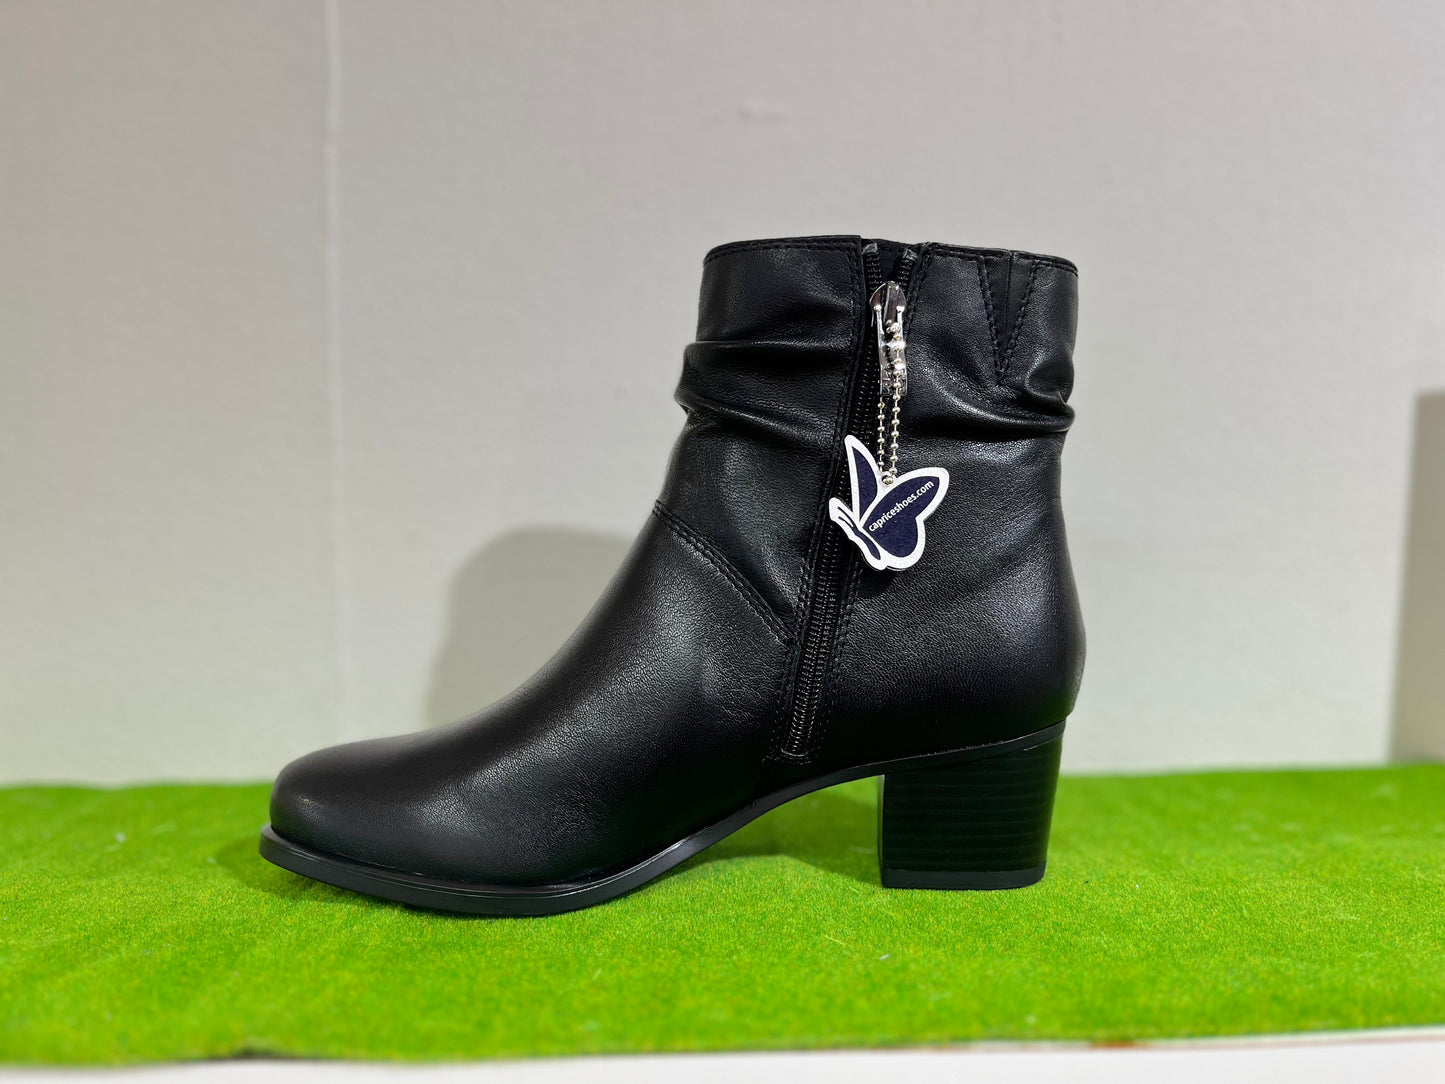 Caprice boot black leather 25335